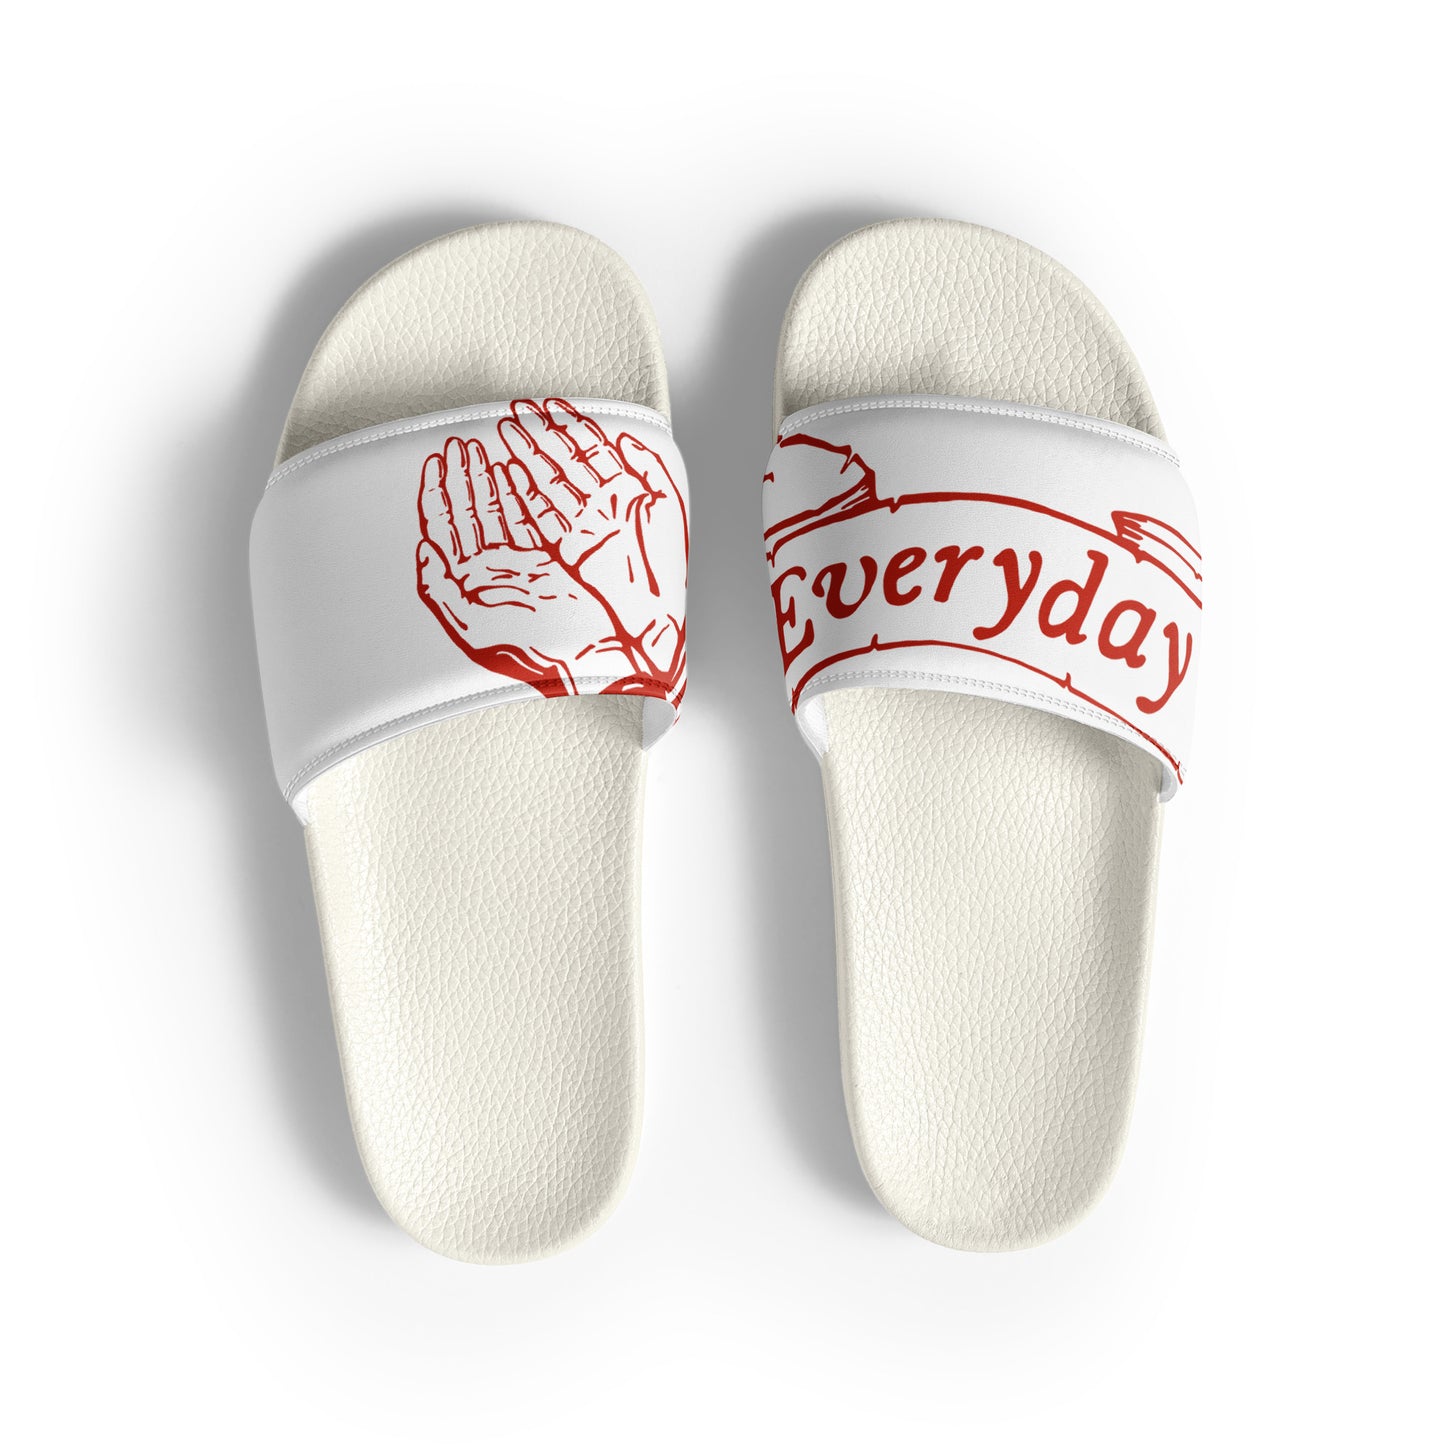 Men's Ultra-Comfy Christian Sandals: Pray Everyday Slides